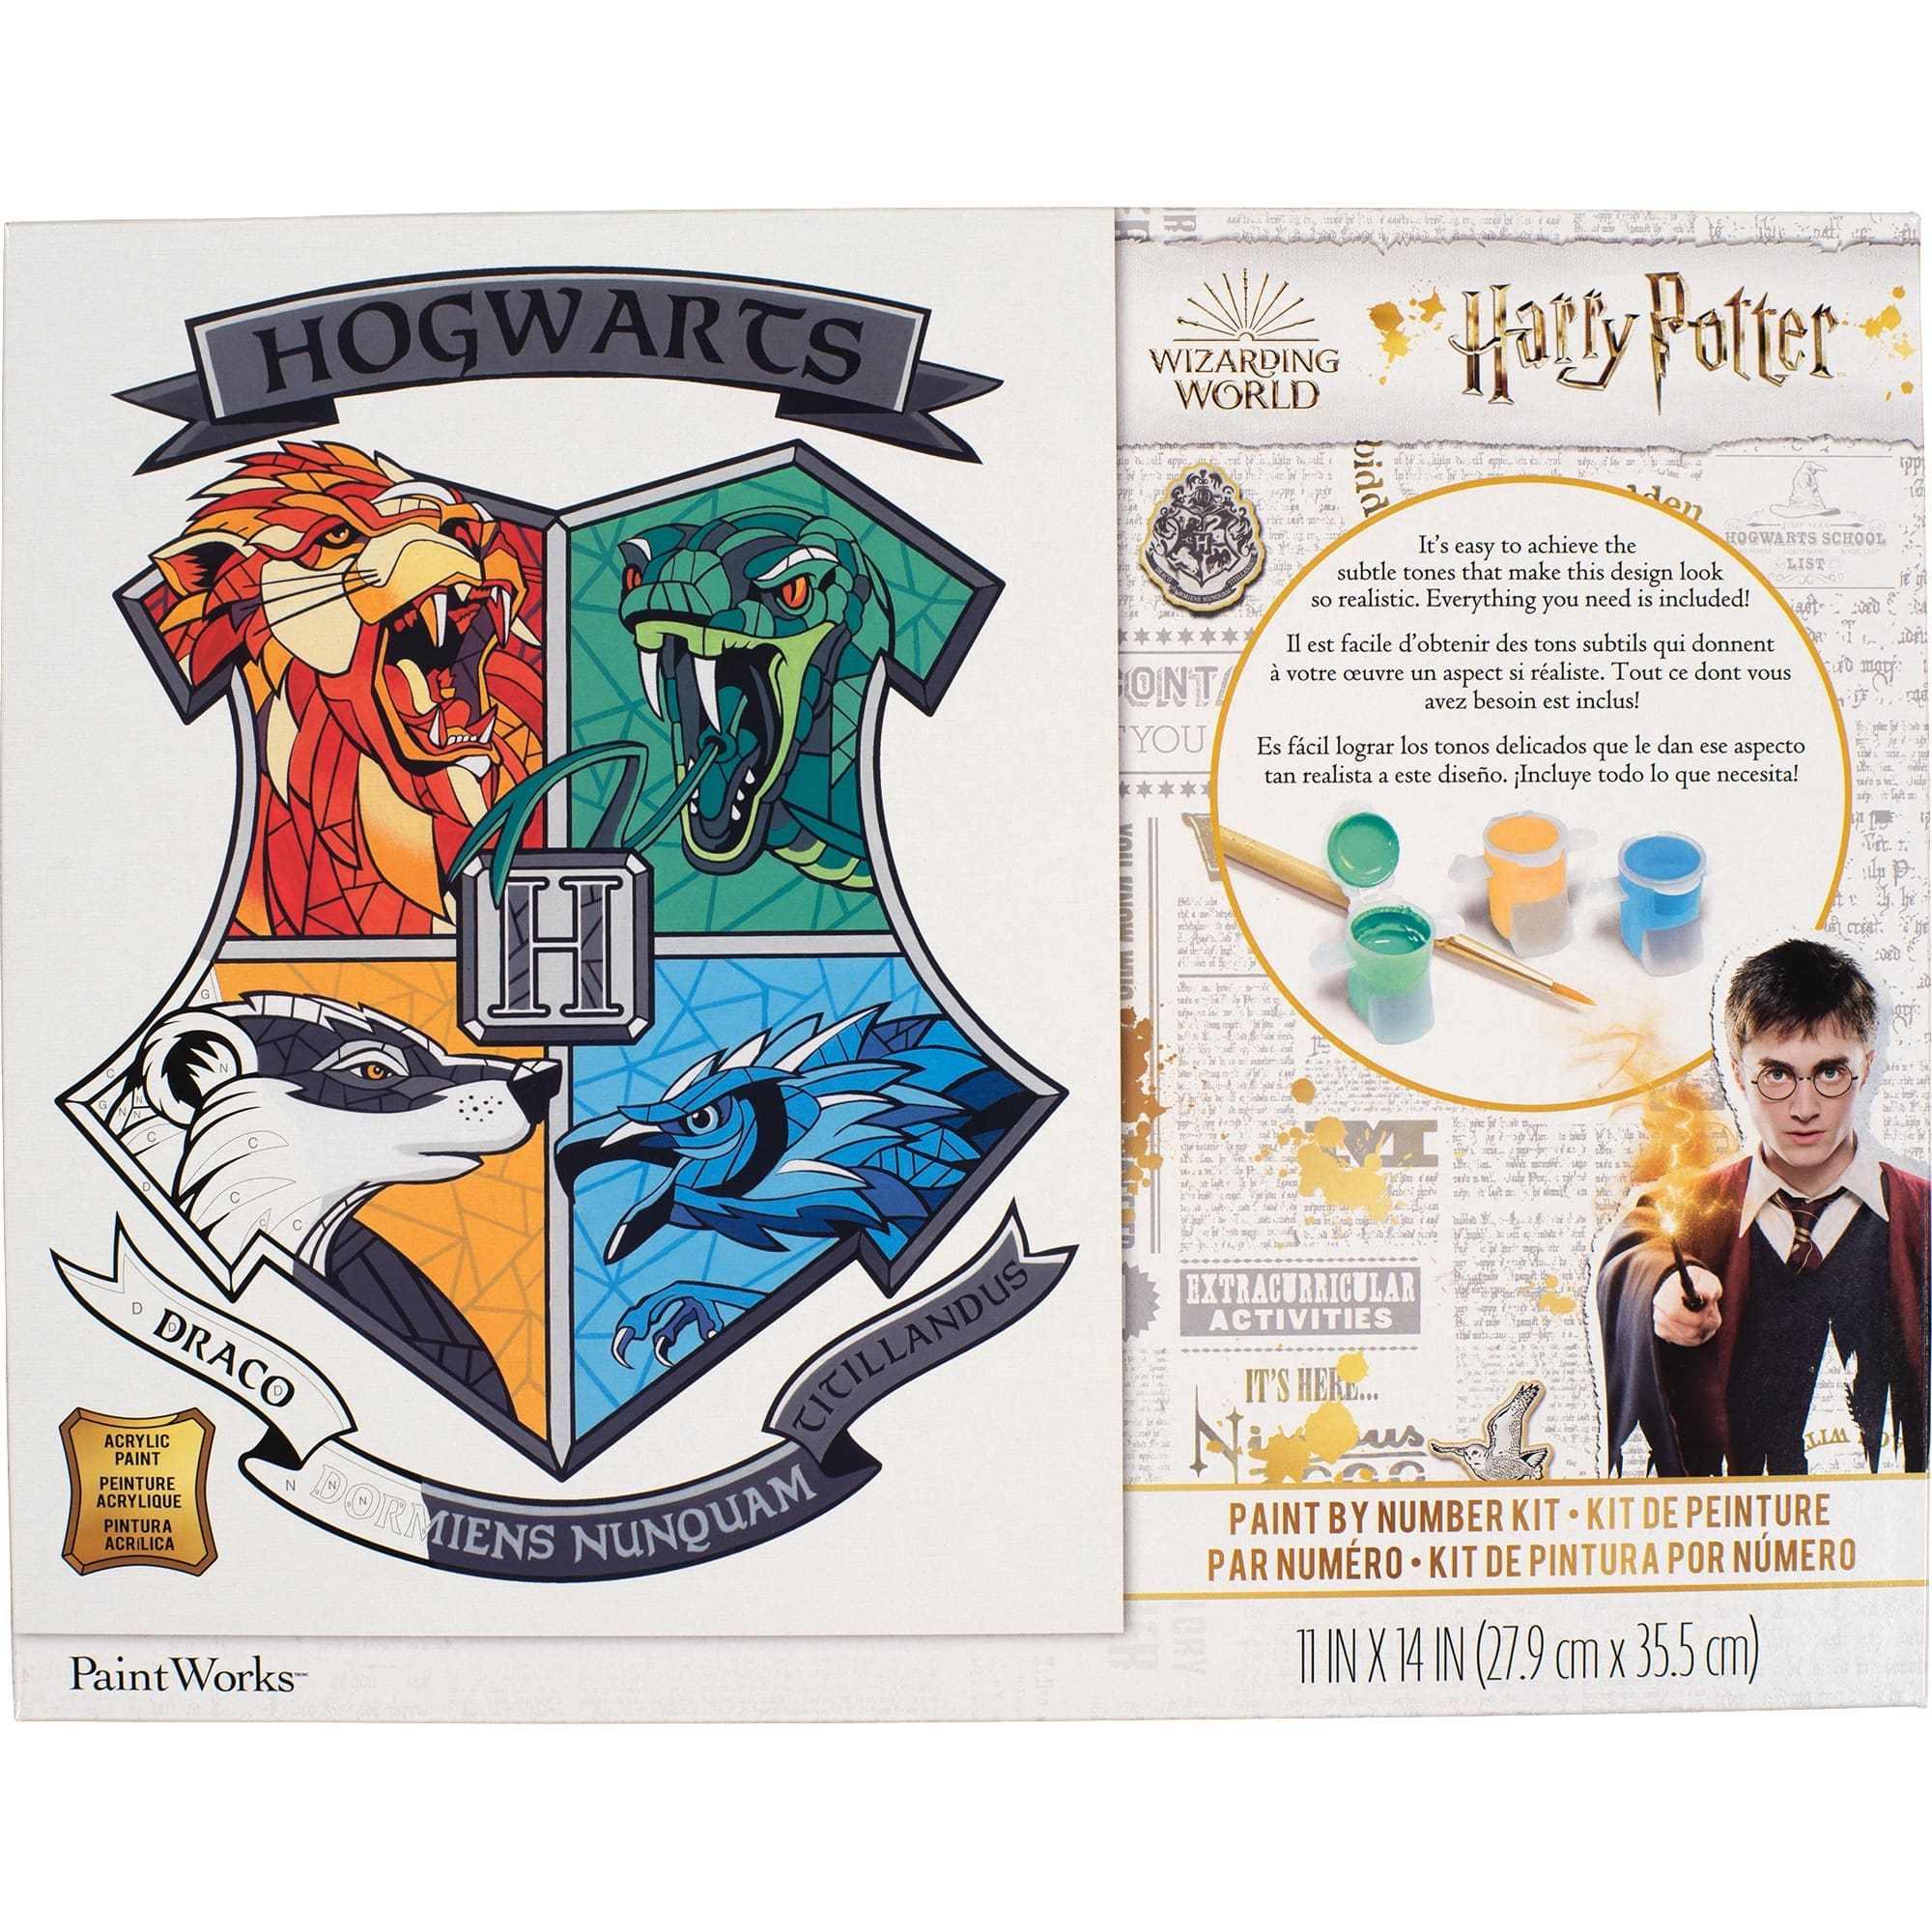 Hogwarts Castle Diamond Painting Kits 20% Off Today – DIY Diamond